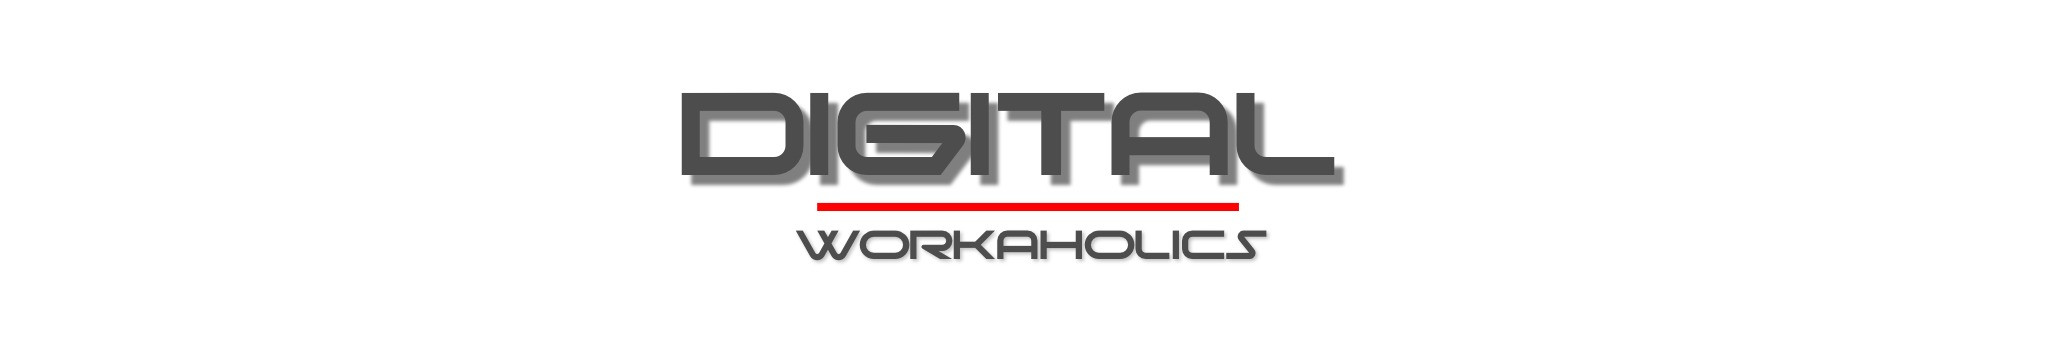 Virtual Assistant Services - Digital Workaholics